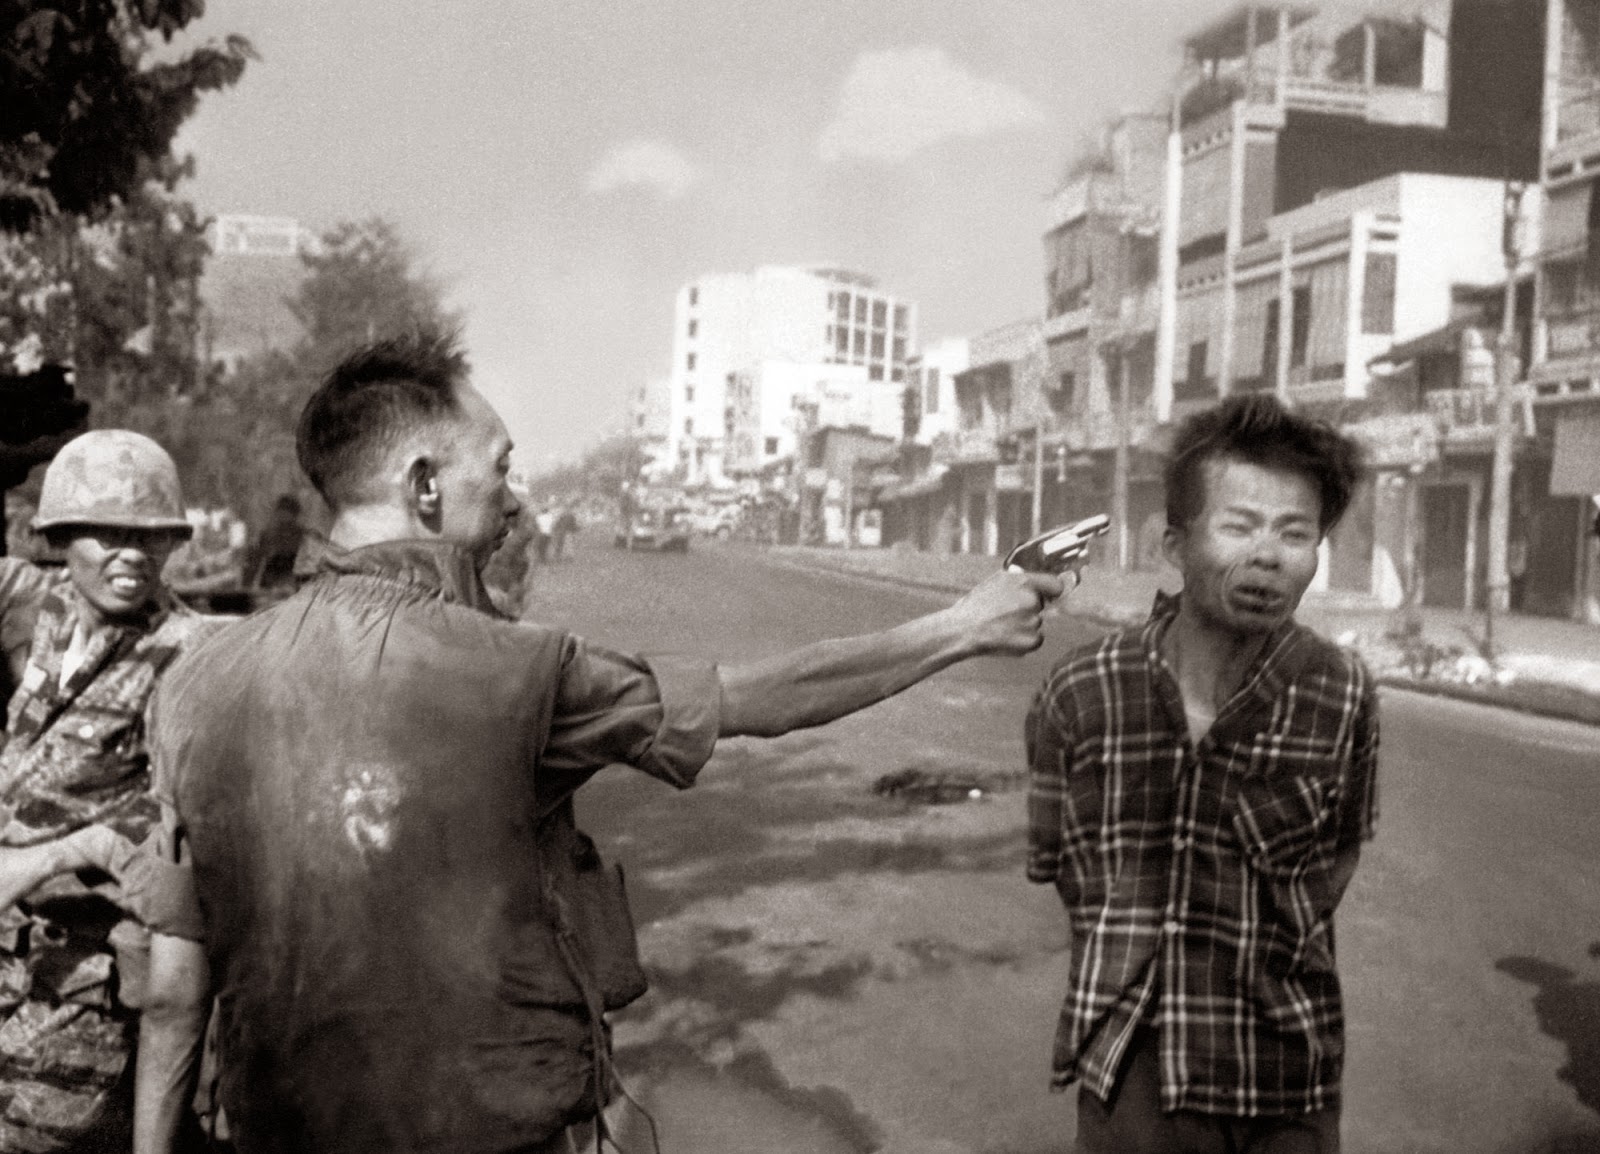  L'exécution du Viet-Cong © Eddie Adams 1968 